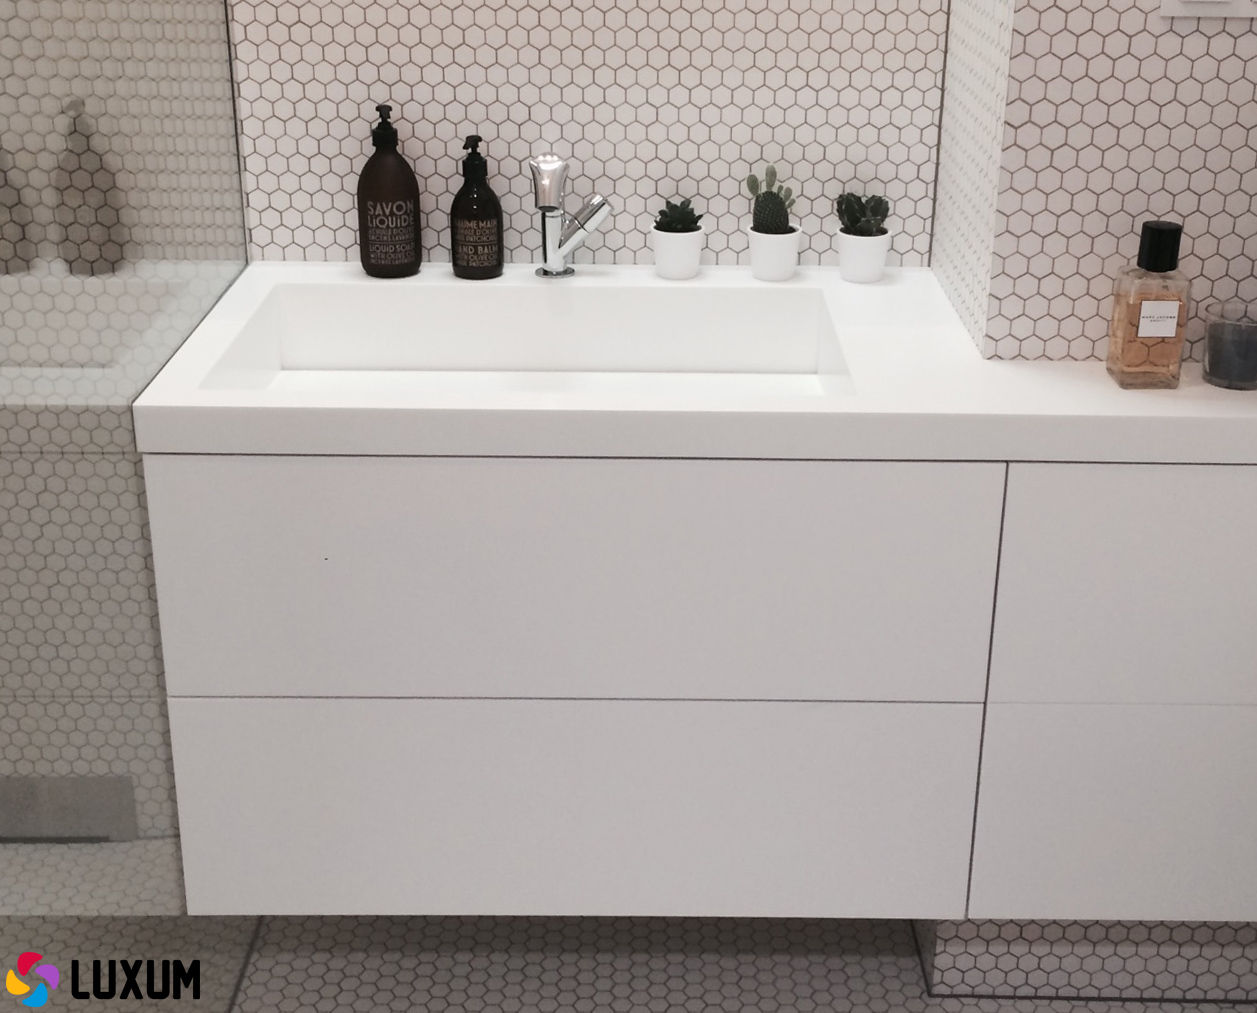 Minimalistyczna umywalka od Luxum, Luxum Luxum Minimalist bathroom